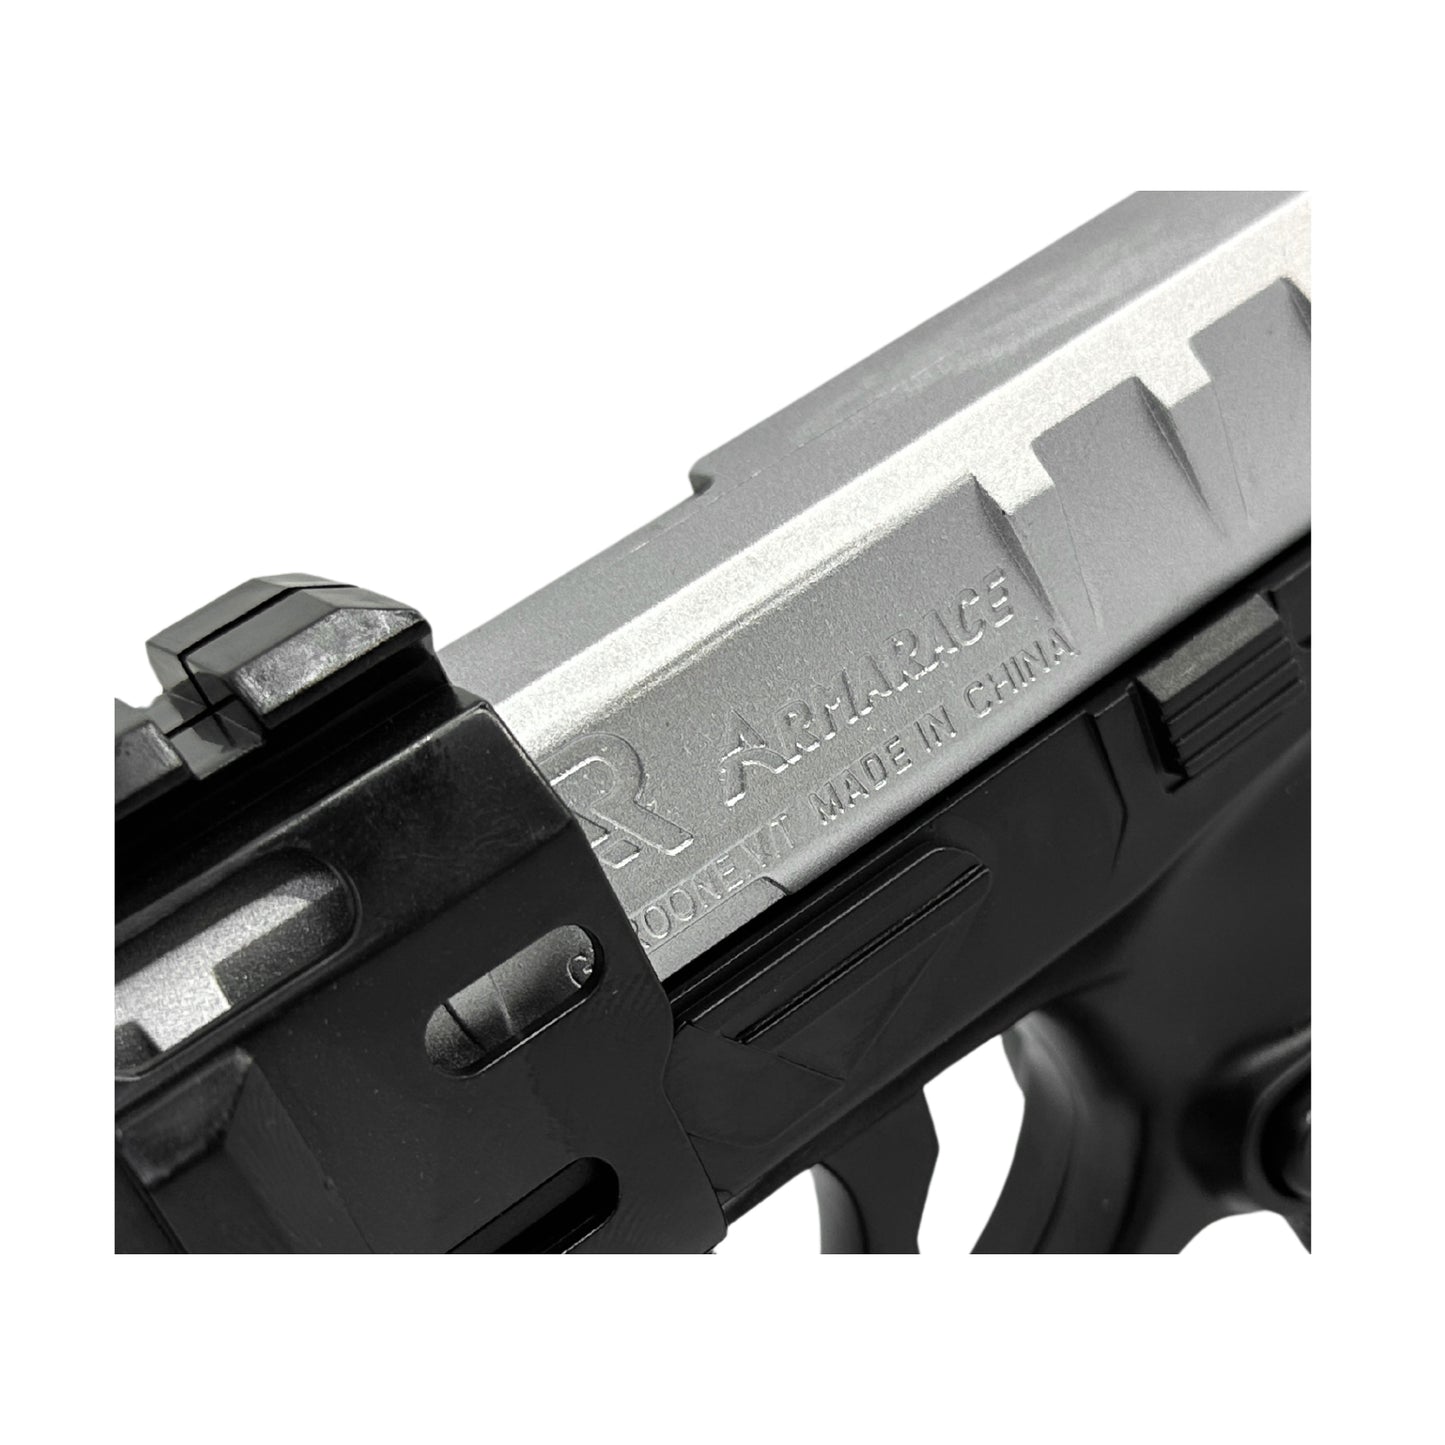 Silver APX Beretta Manual Pistol - Gel Blaster